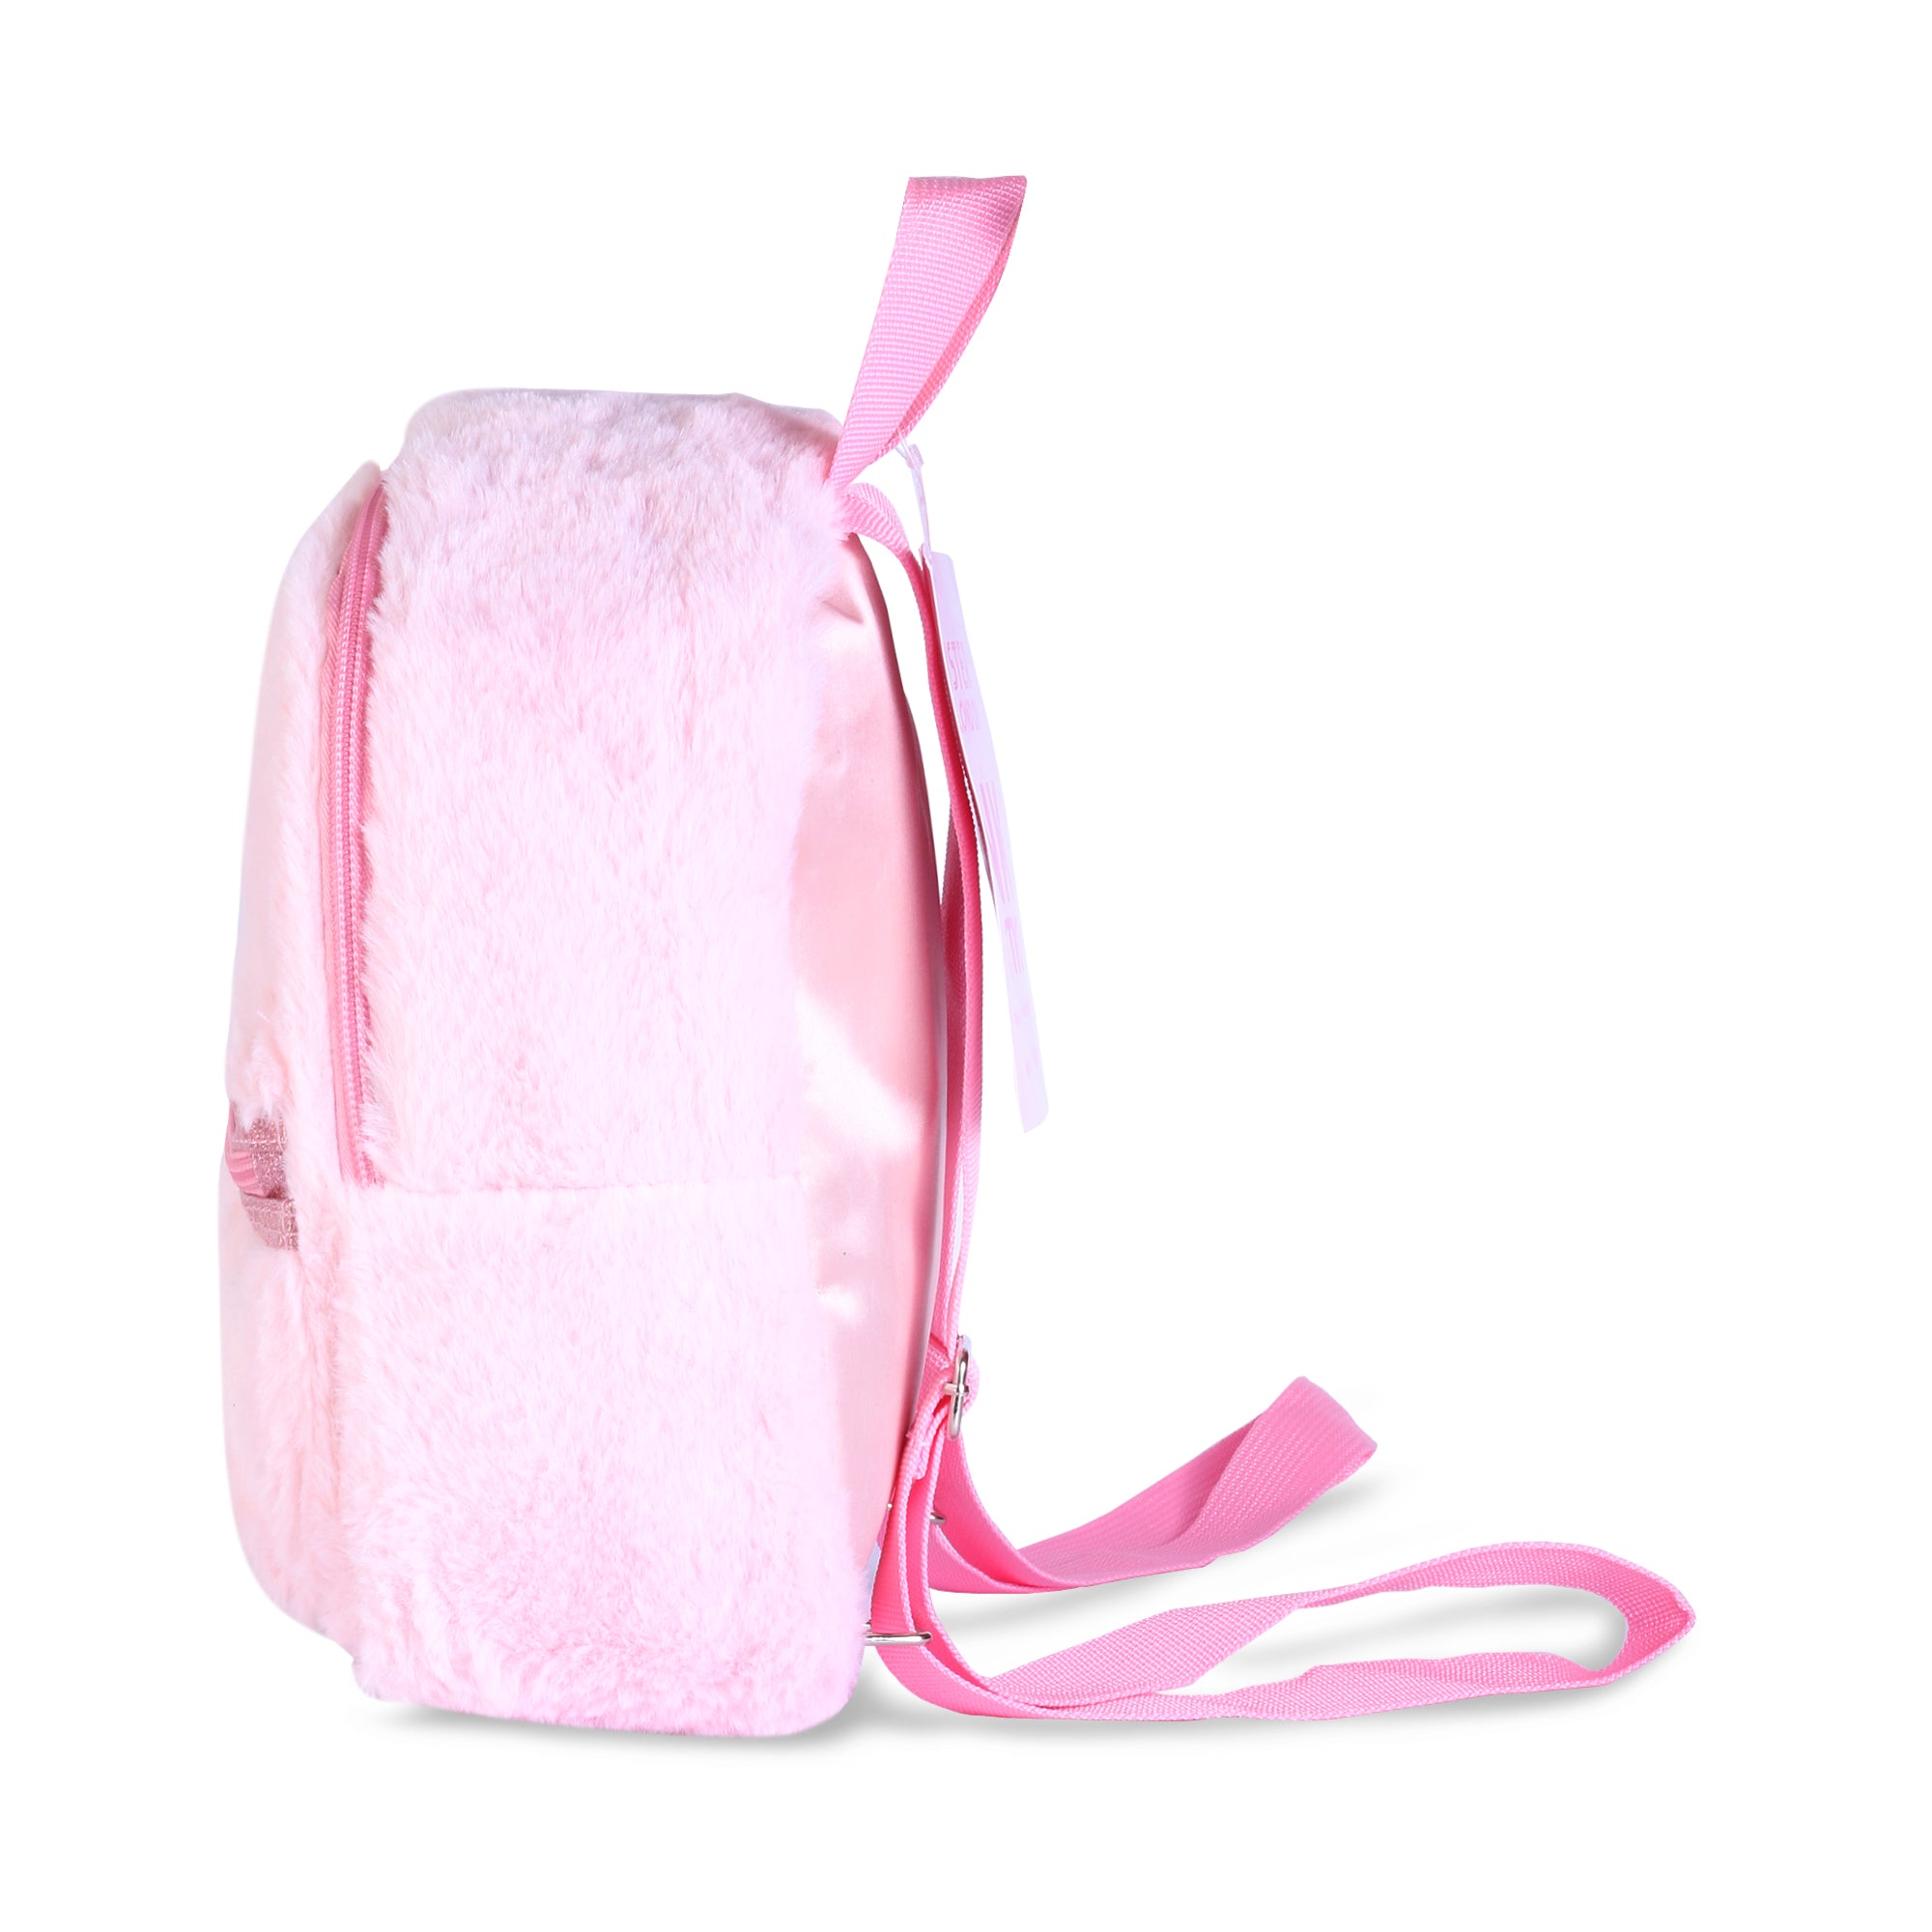 Hamster PC Pink Fur Heart Backpack